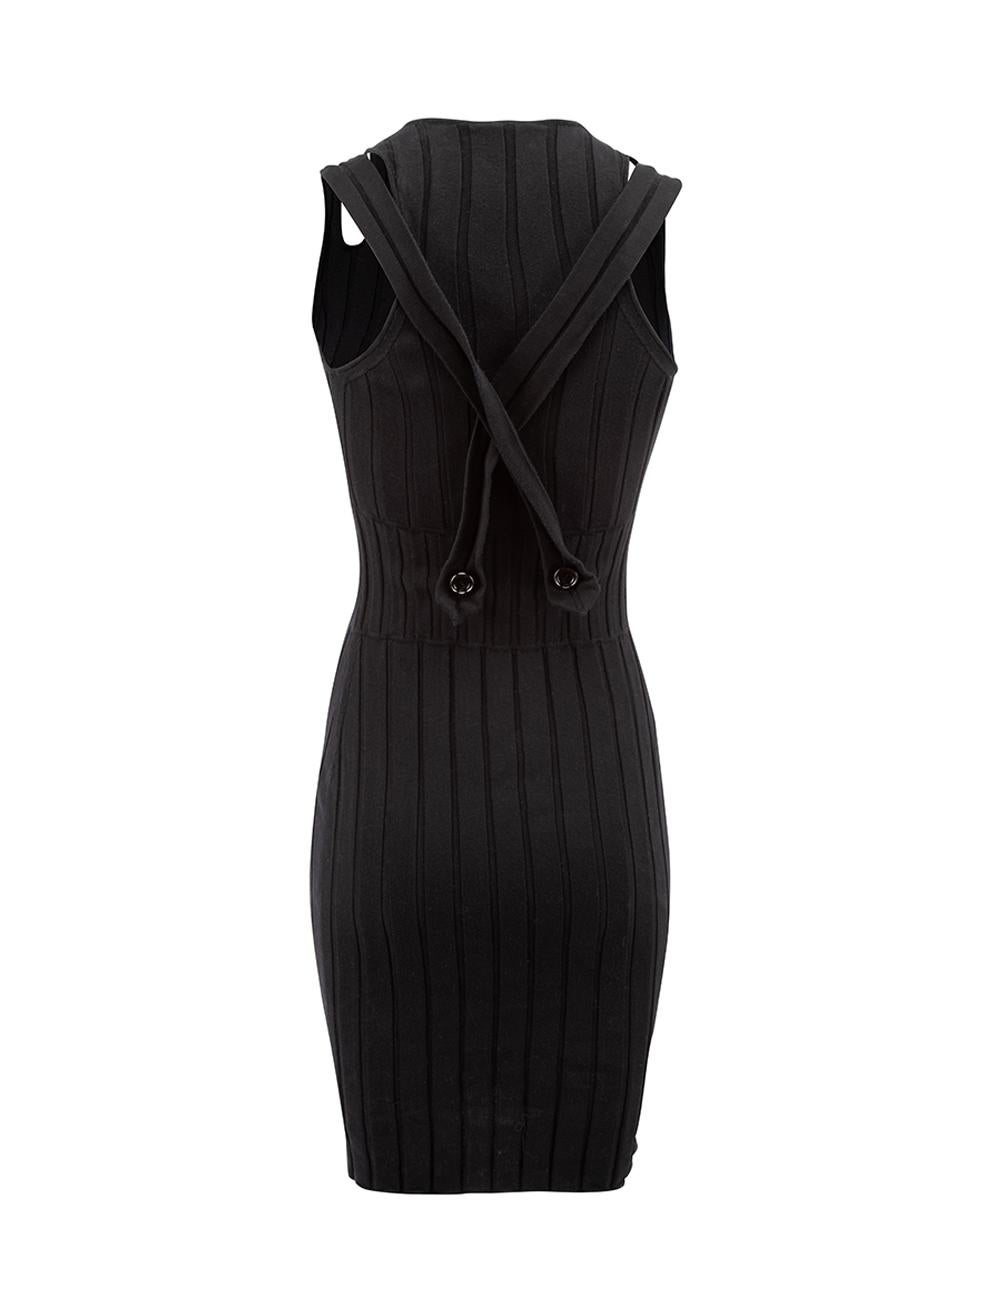 Fendi Black Rib Knit Mini Dress Size XS In Excellent Condition For Sale In London, GB